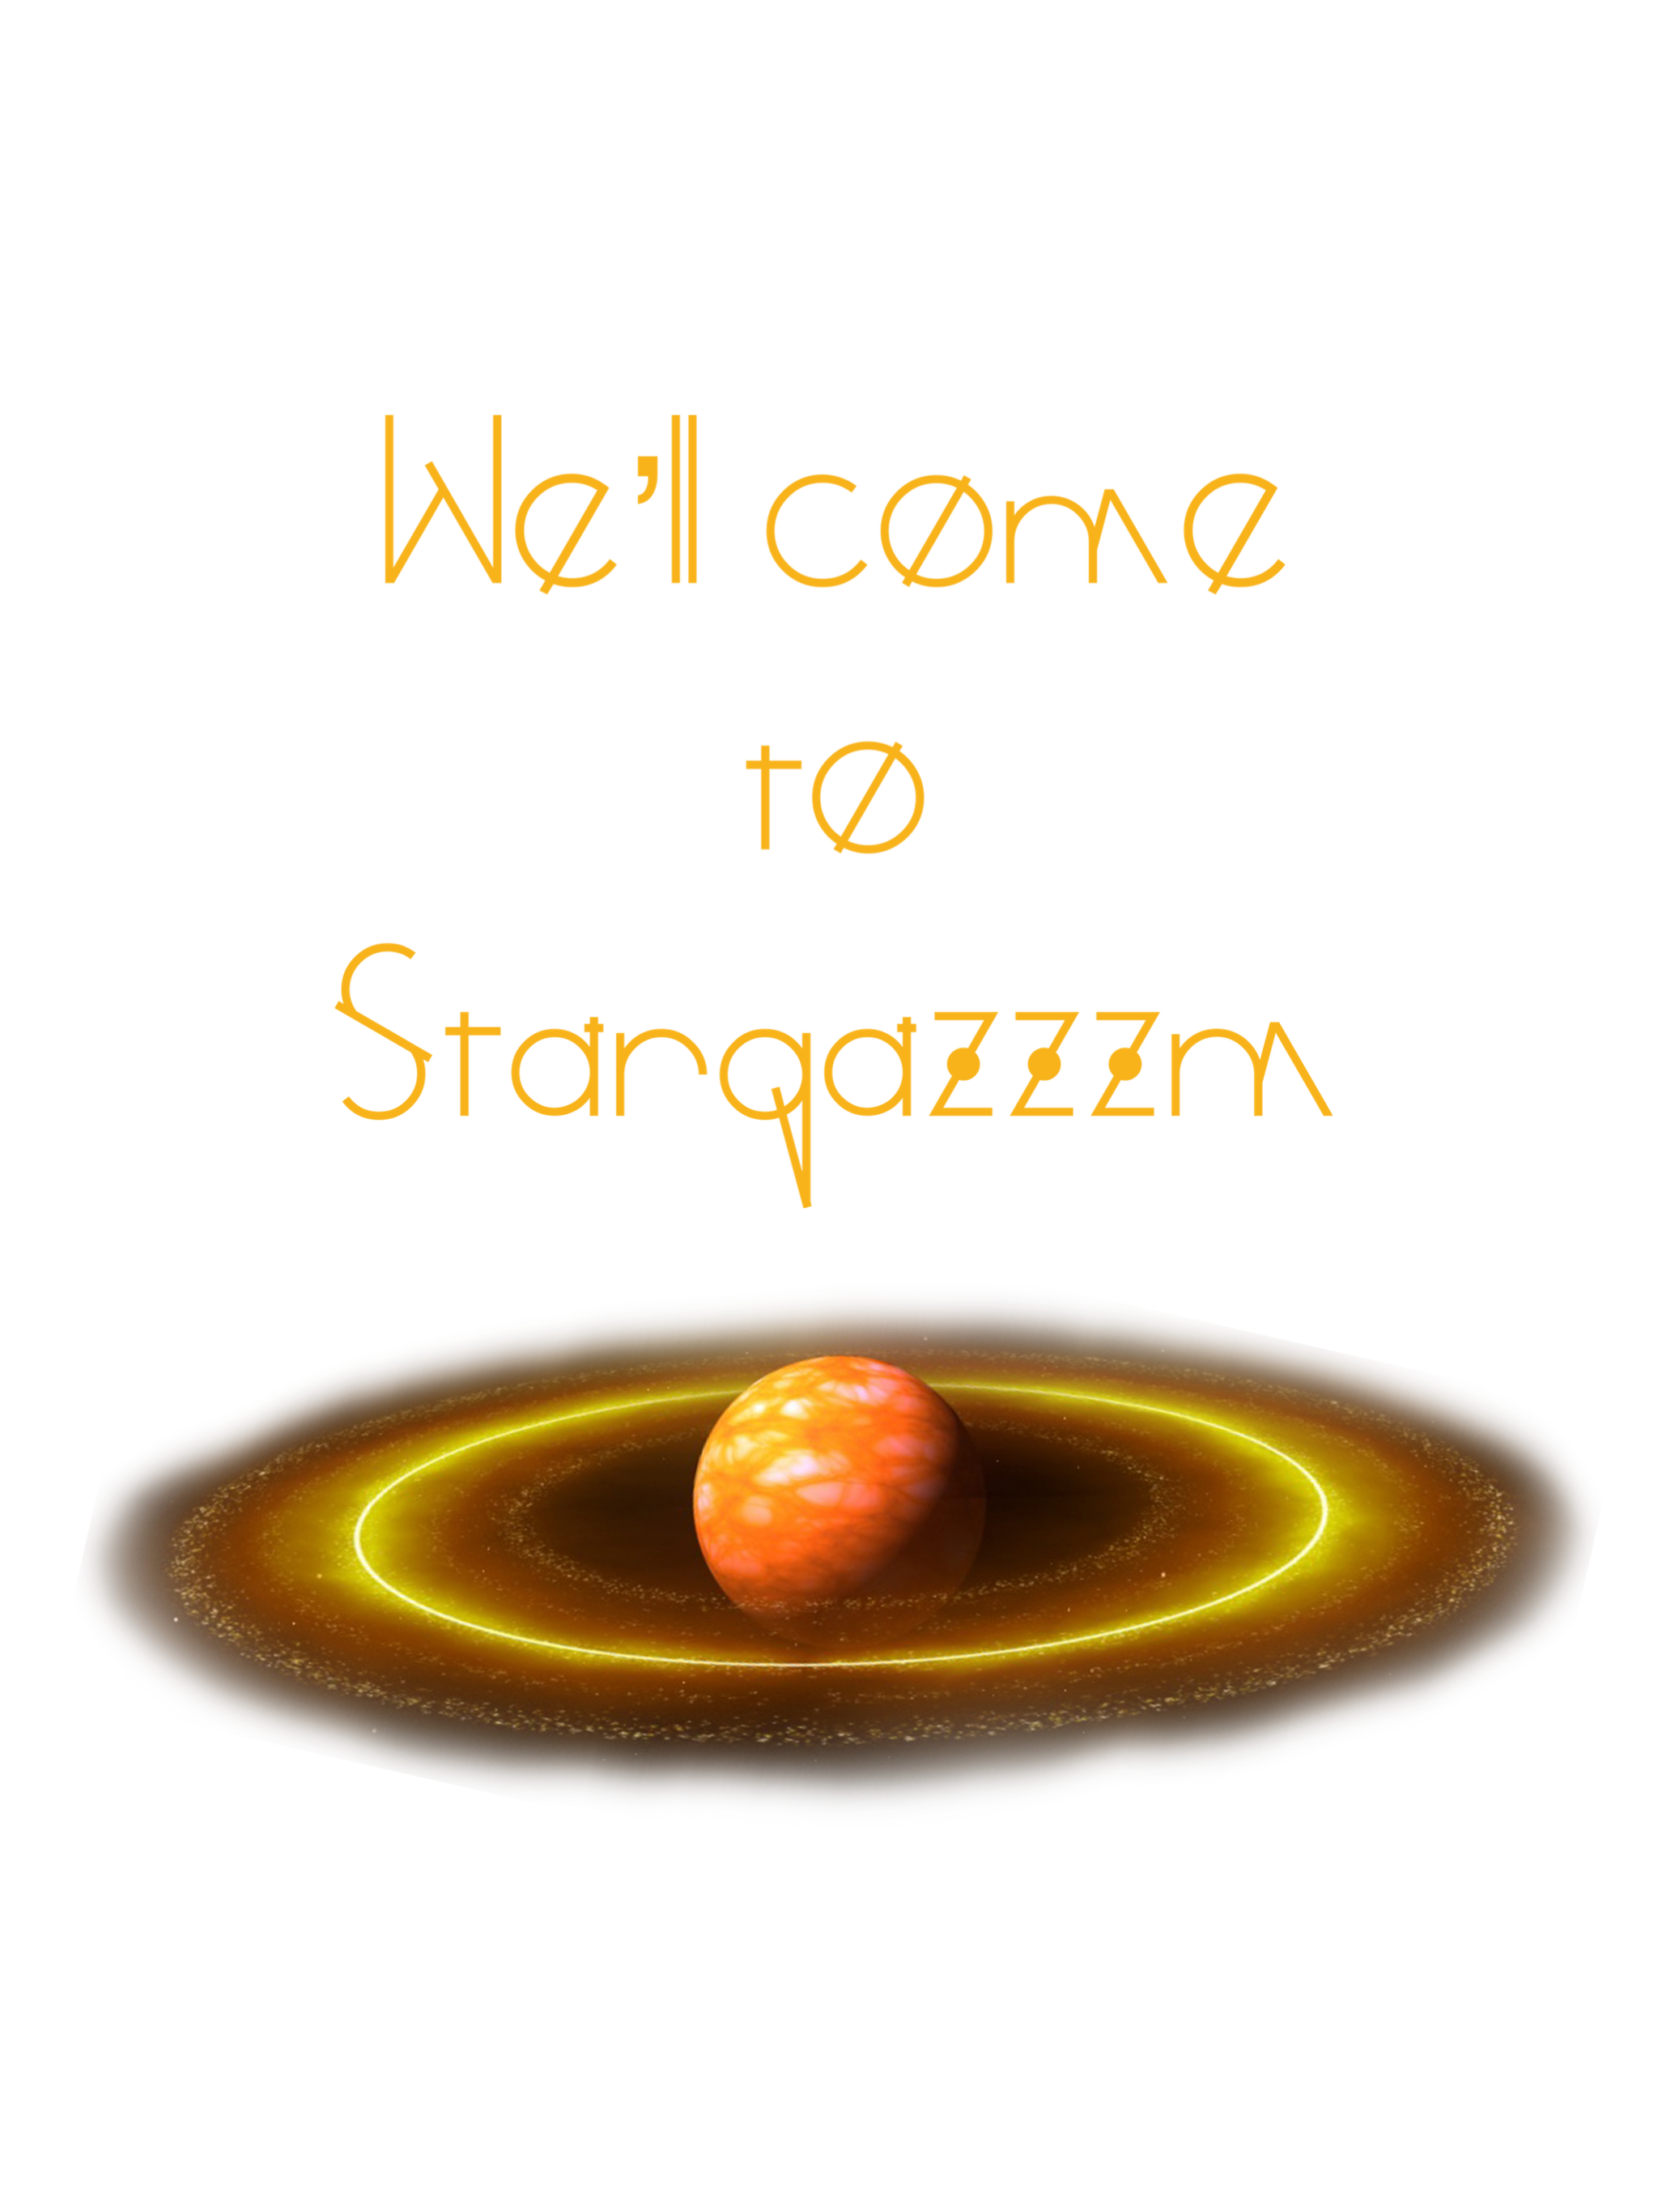 Stargazzzm ⚡️ image: 1